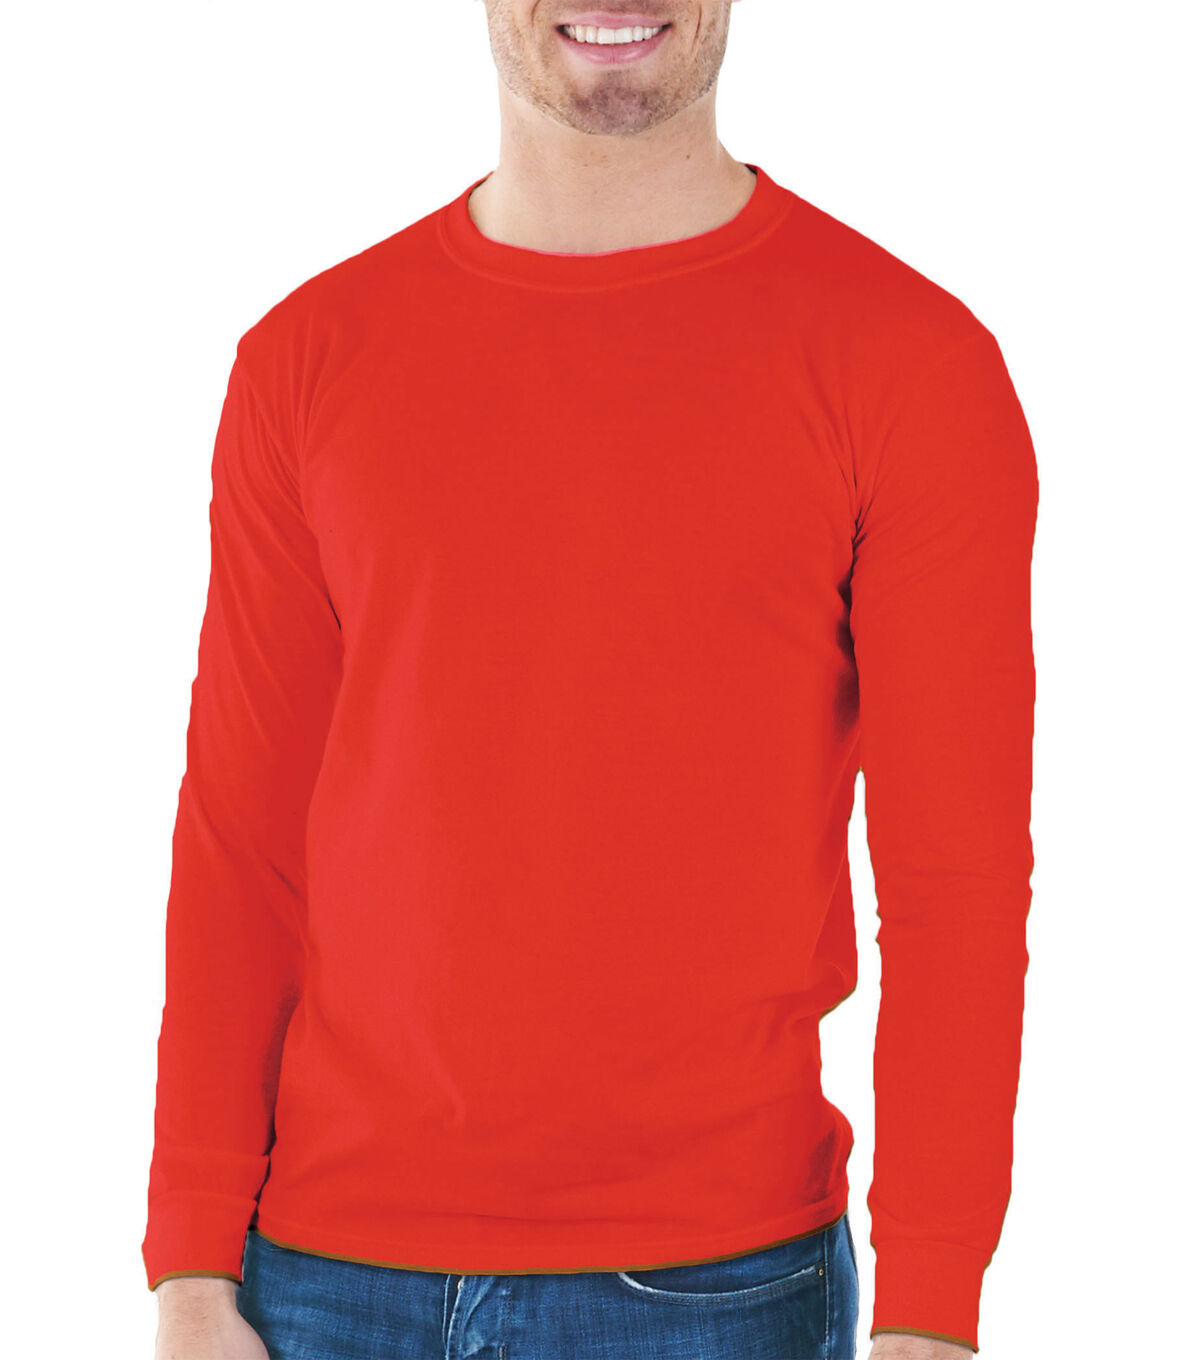 long red shirt